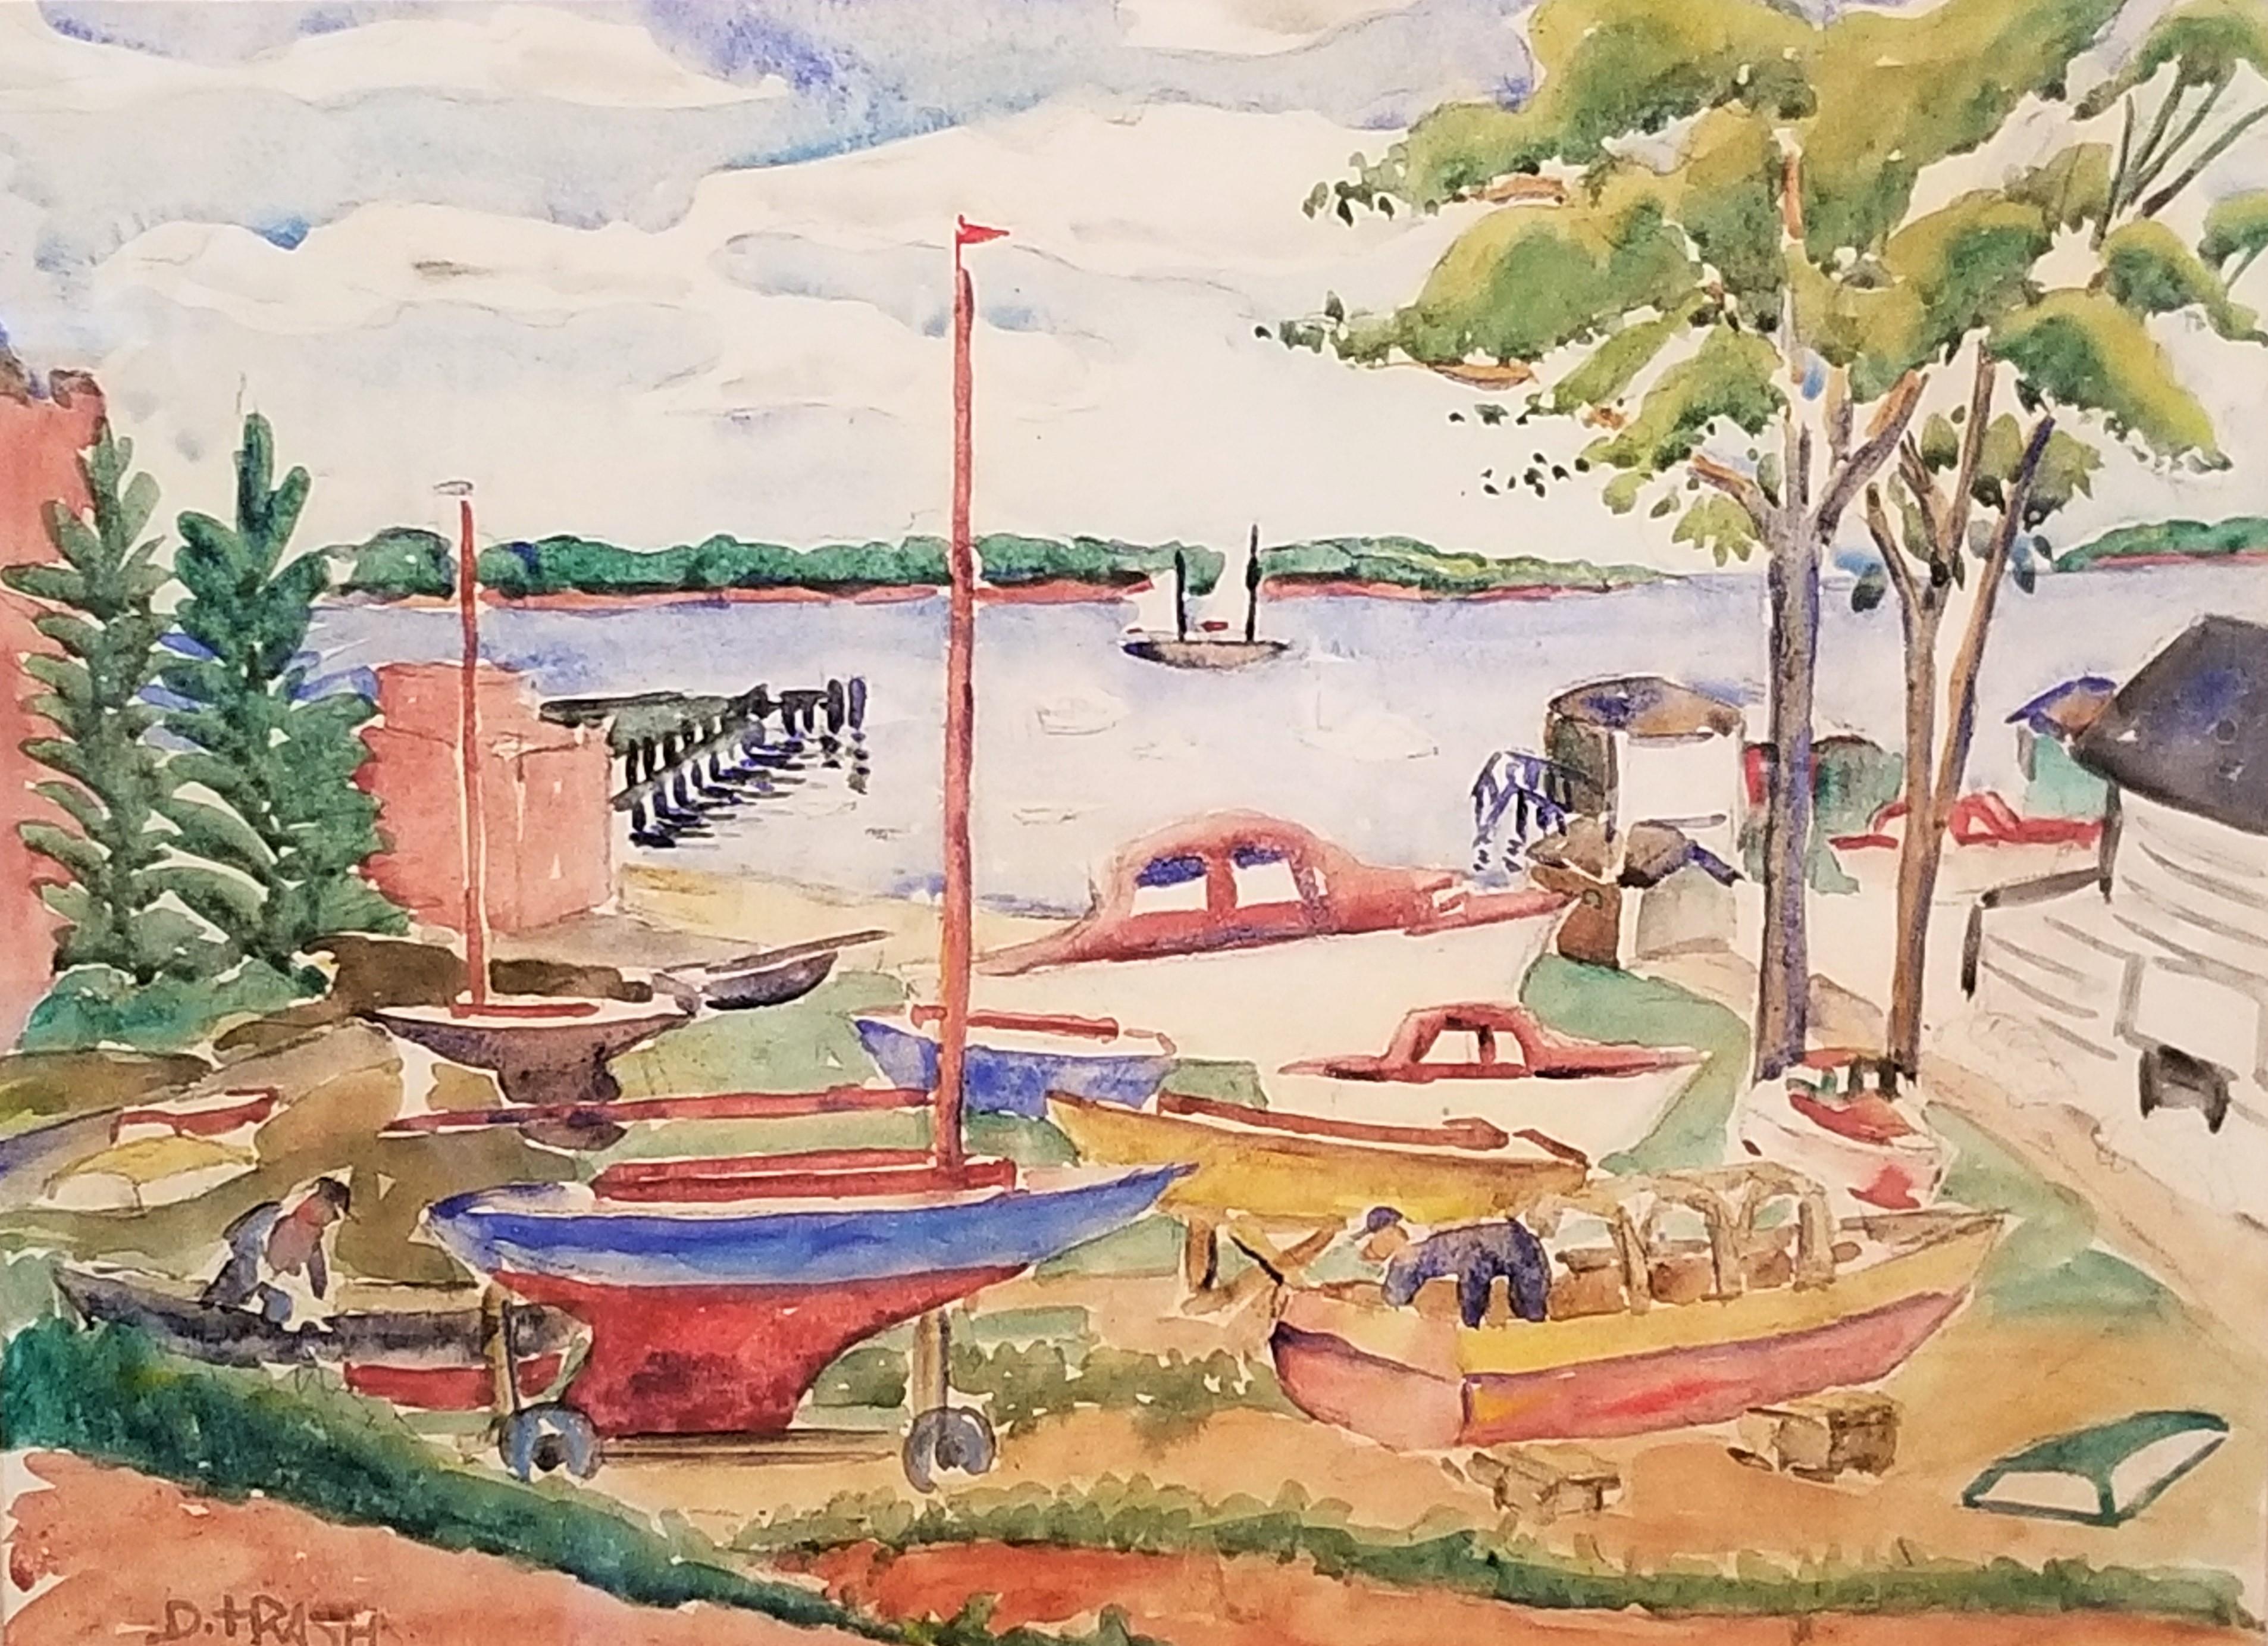 Dox Thrash (1892-1965)
Boatyard
Watercolor on paper, 14 1/2